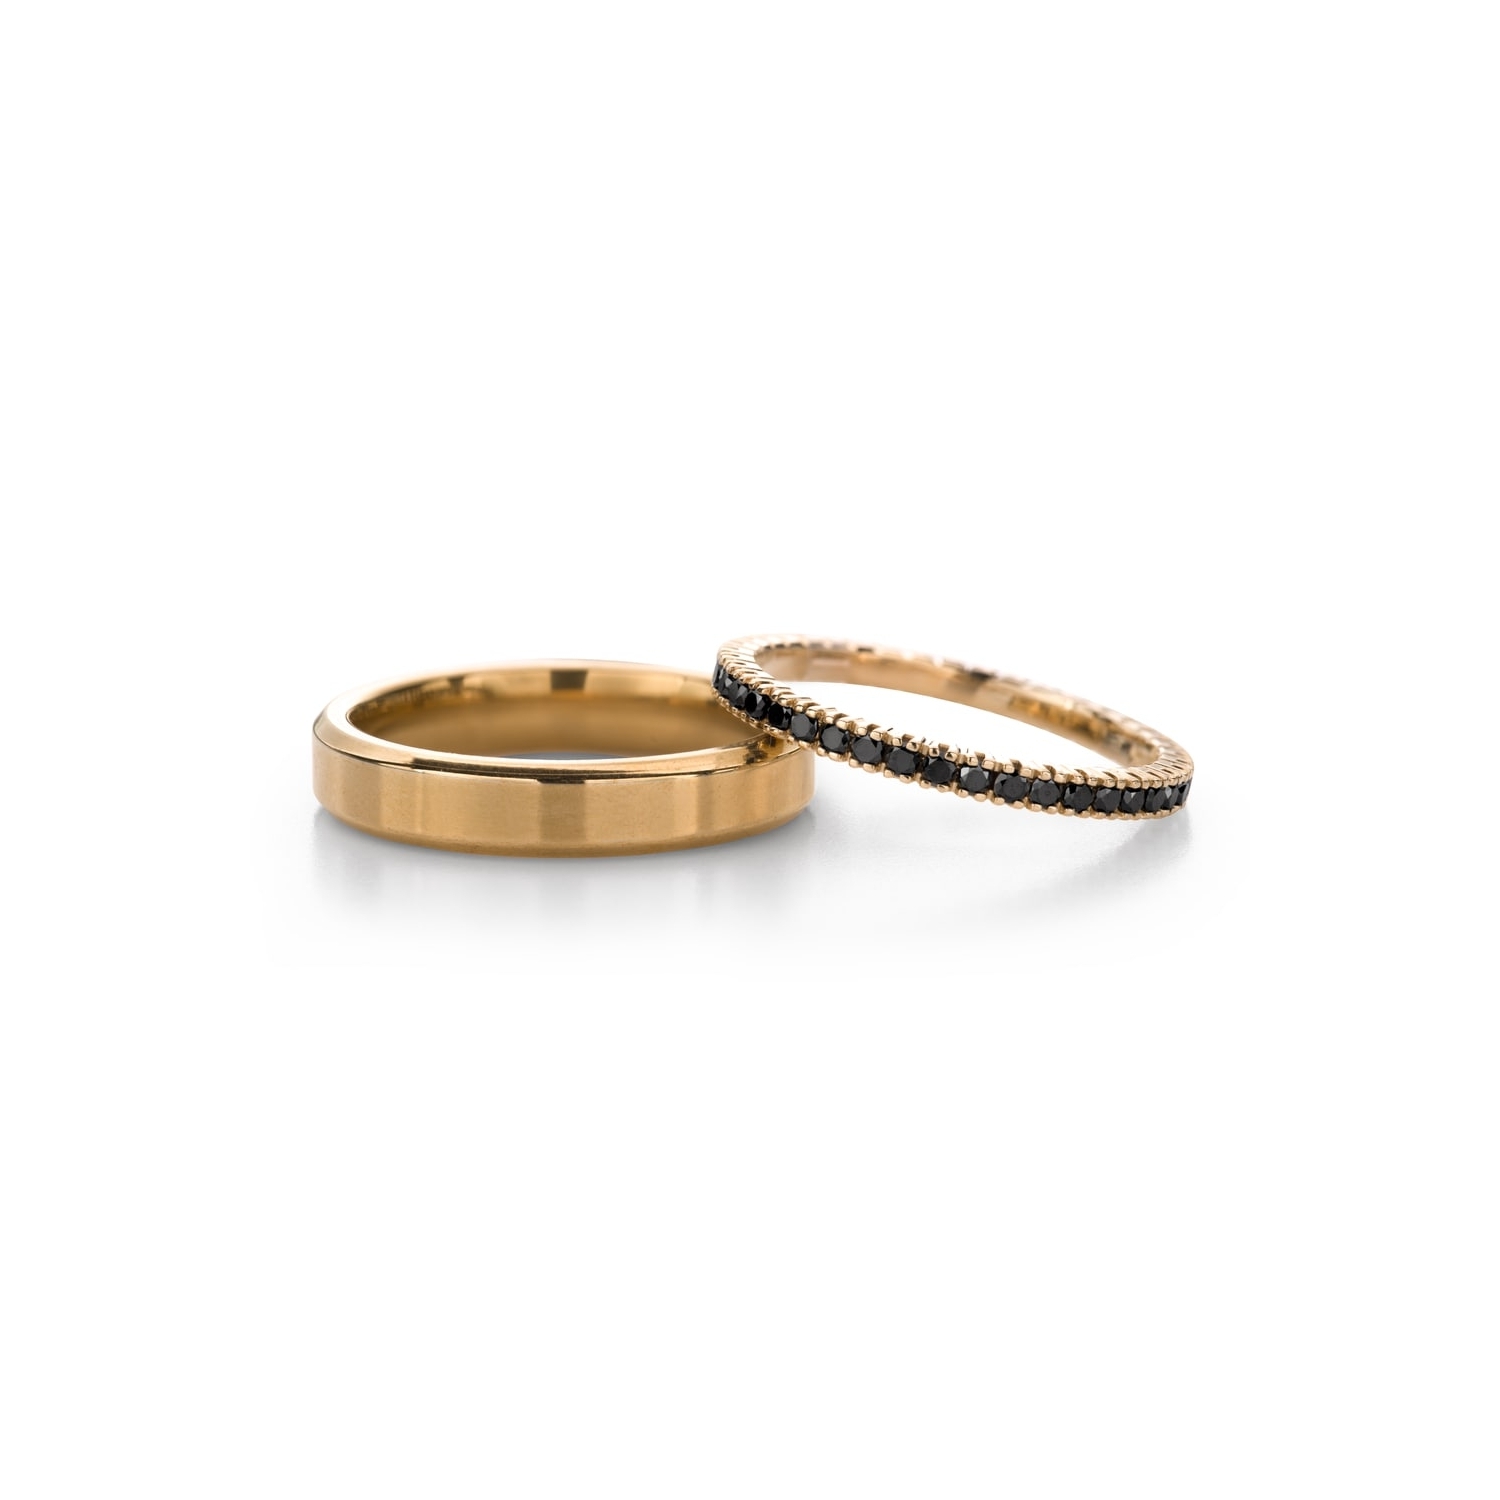 Golden wedding rings with diamonds "VKA 328"